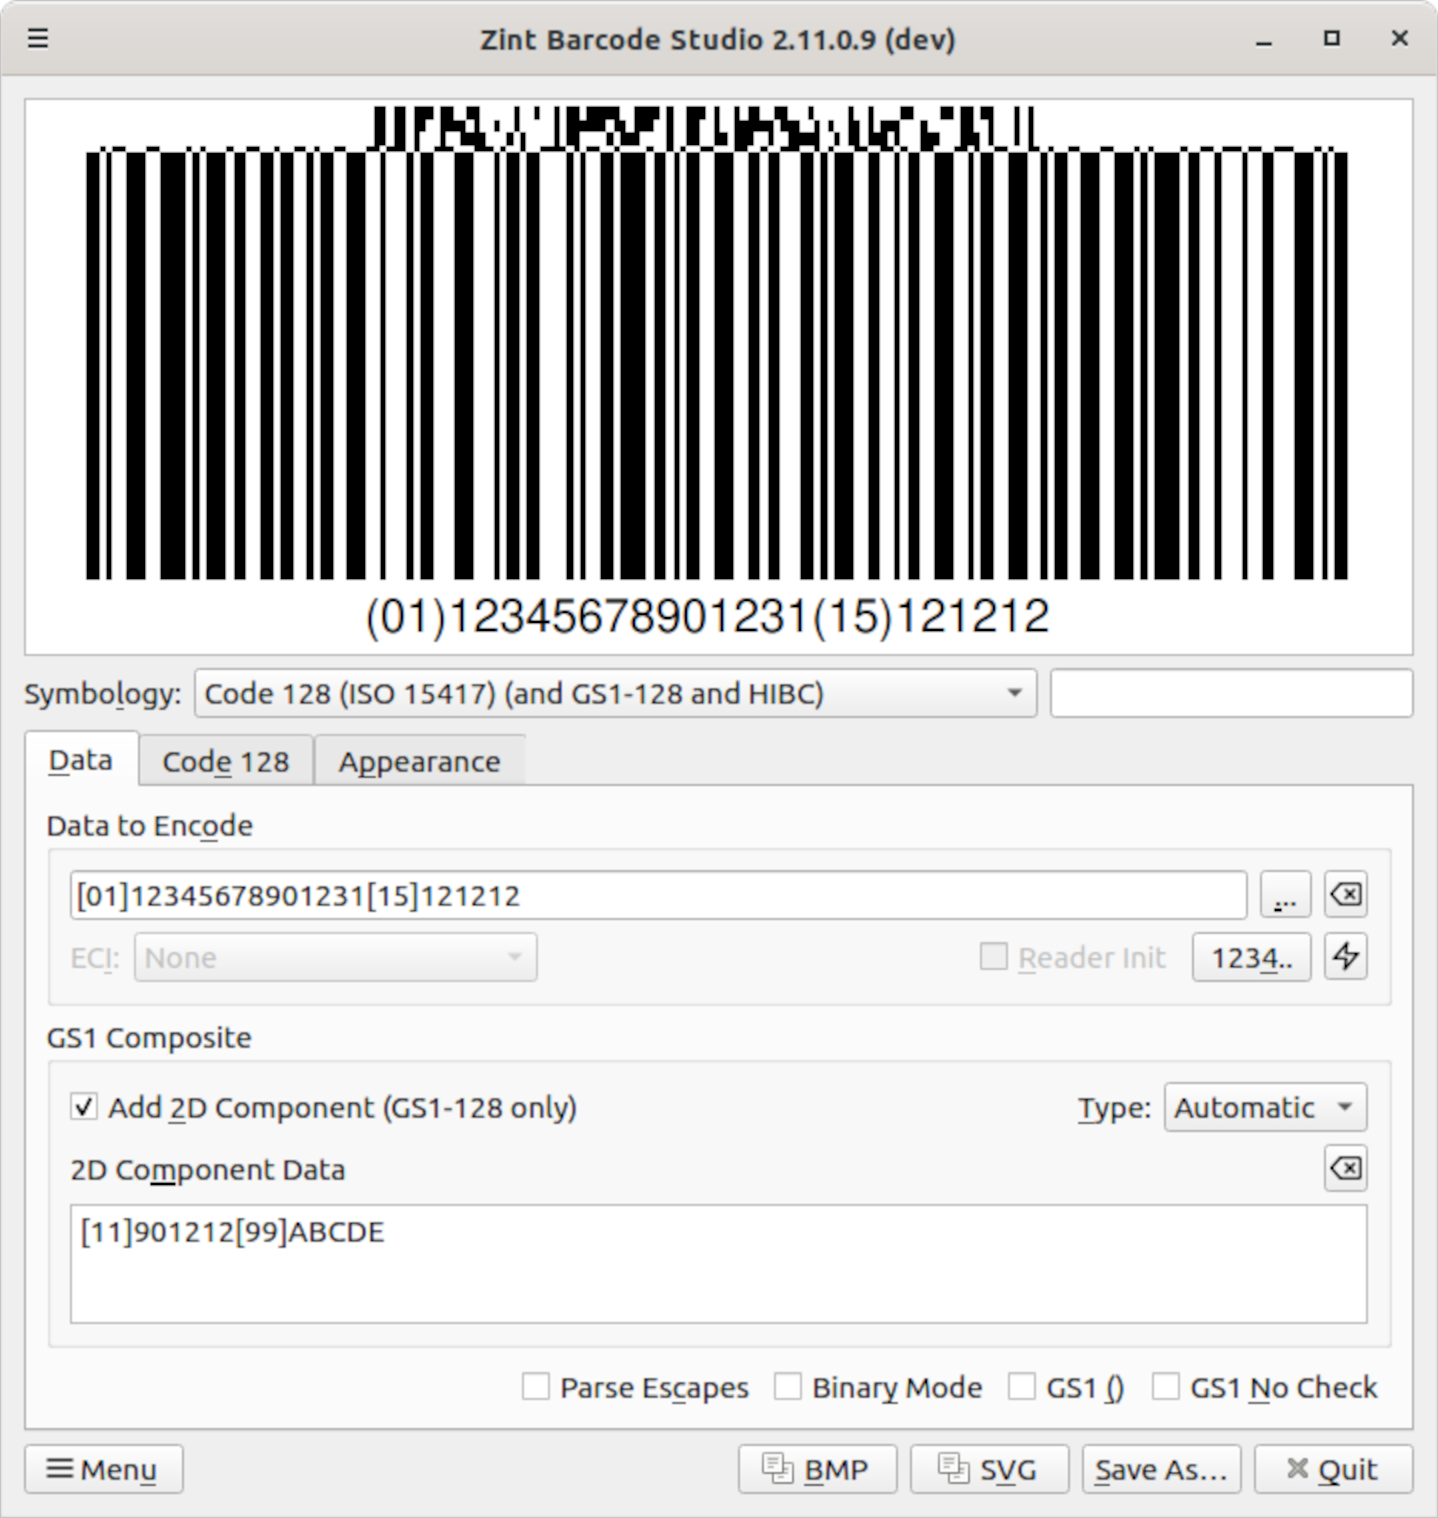 Zint Barcode Studio encoding GS1 Composite data